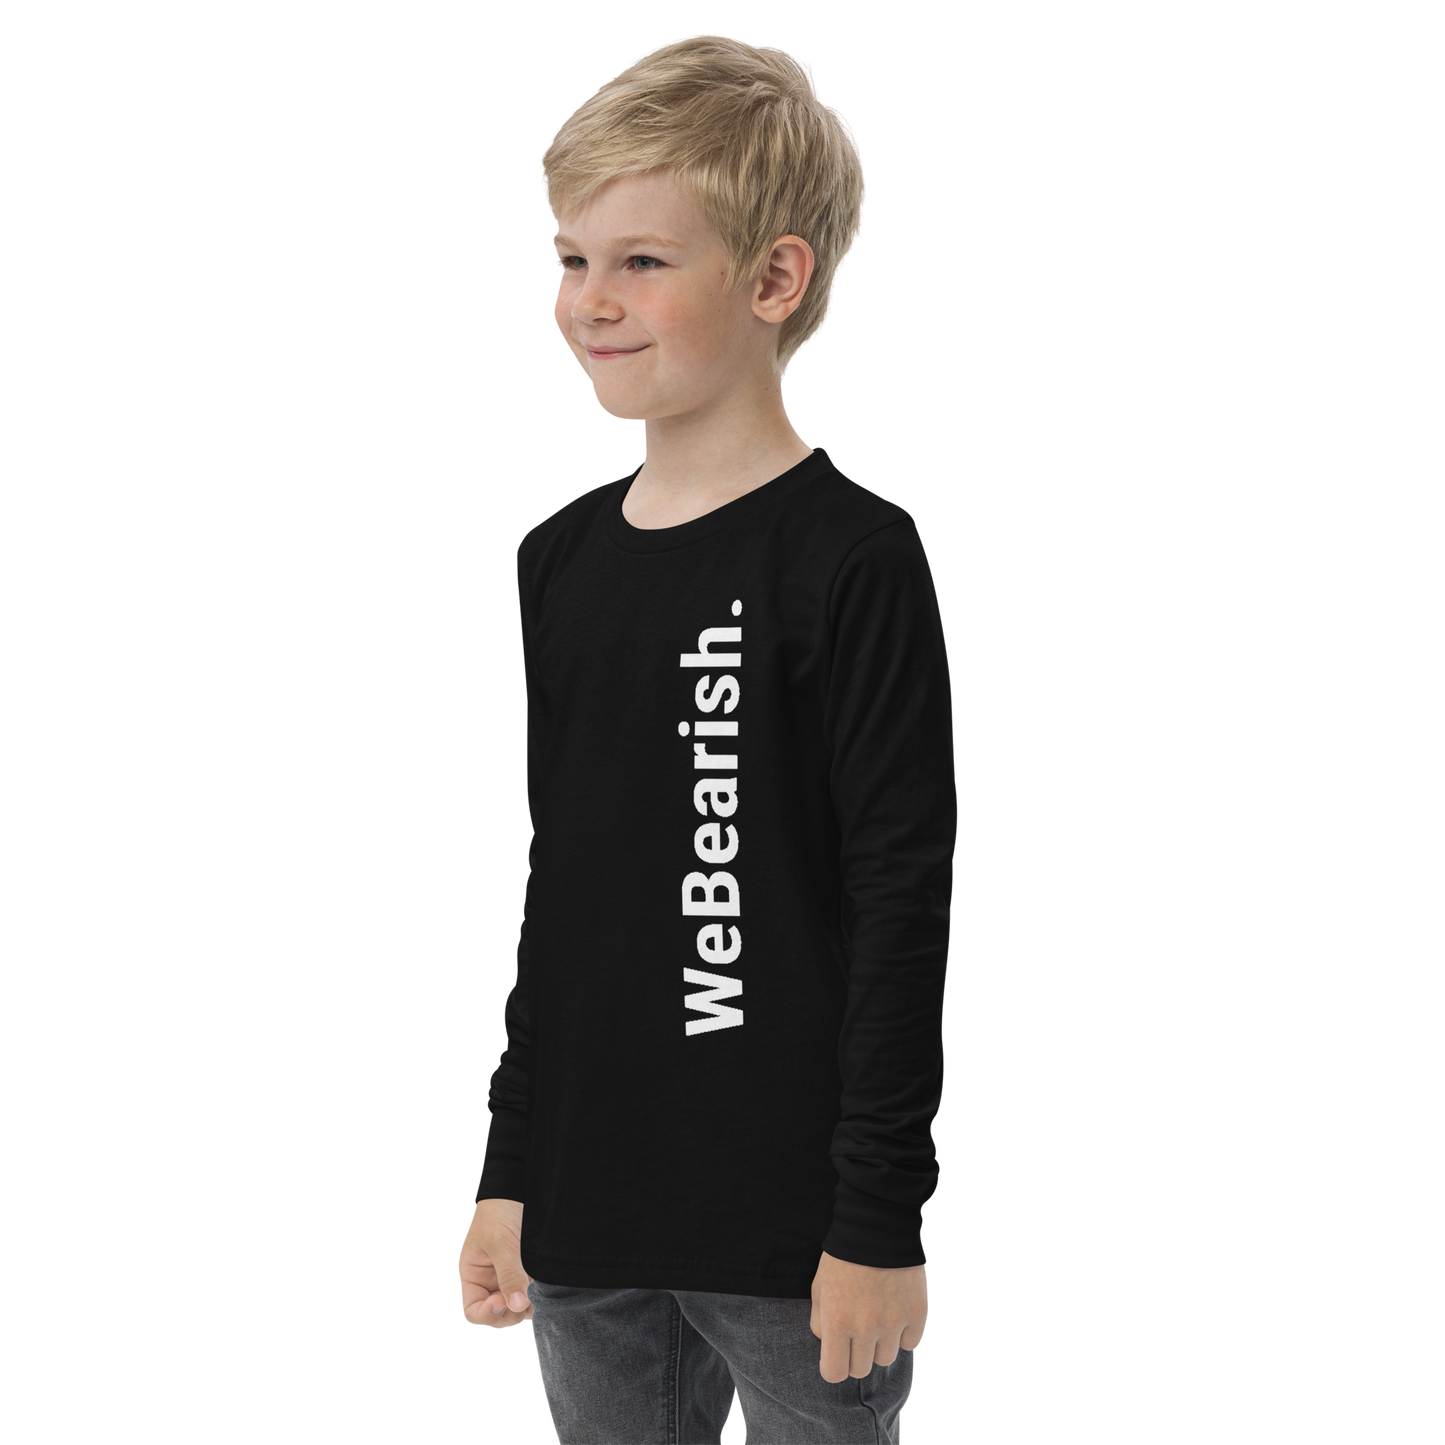 WeBearish Kid's Long-Sleeve T-shirt (Black/White)